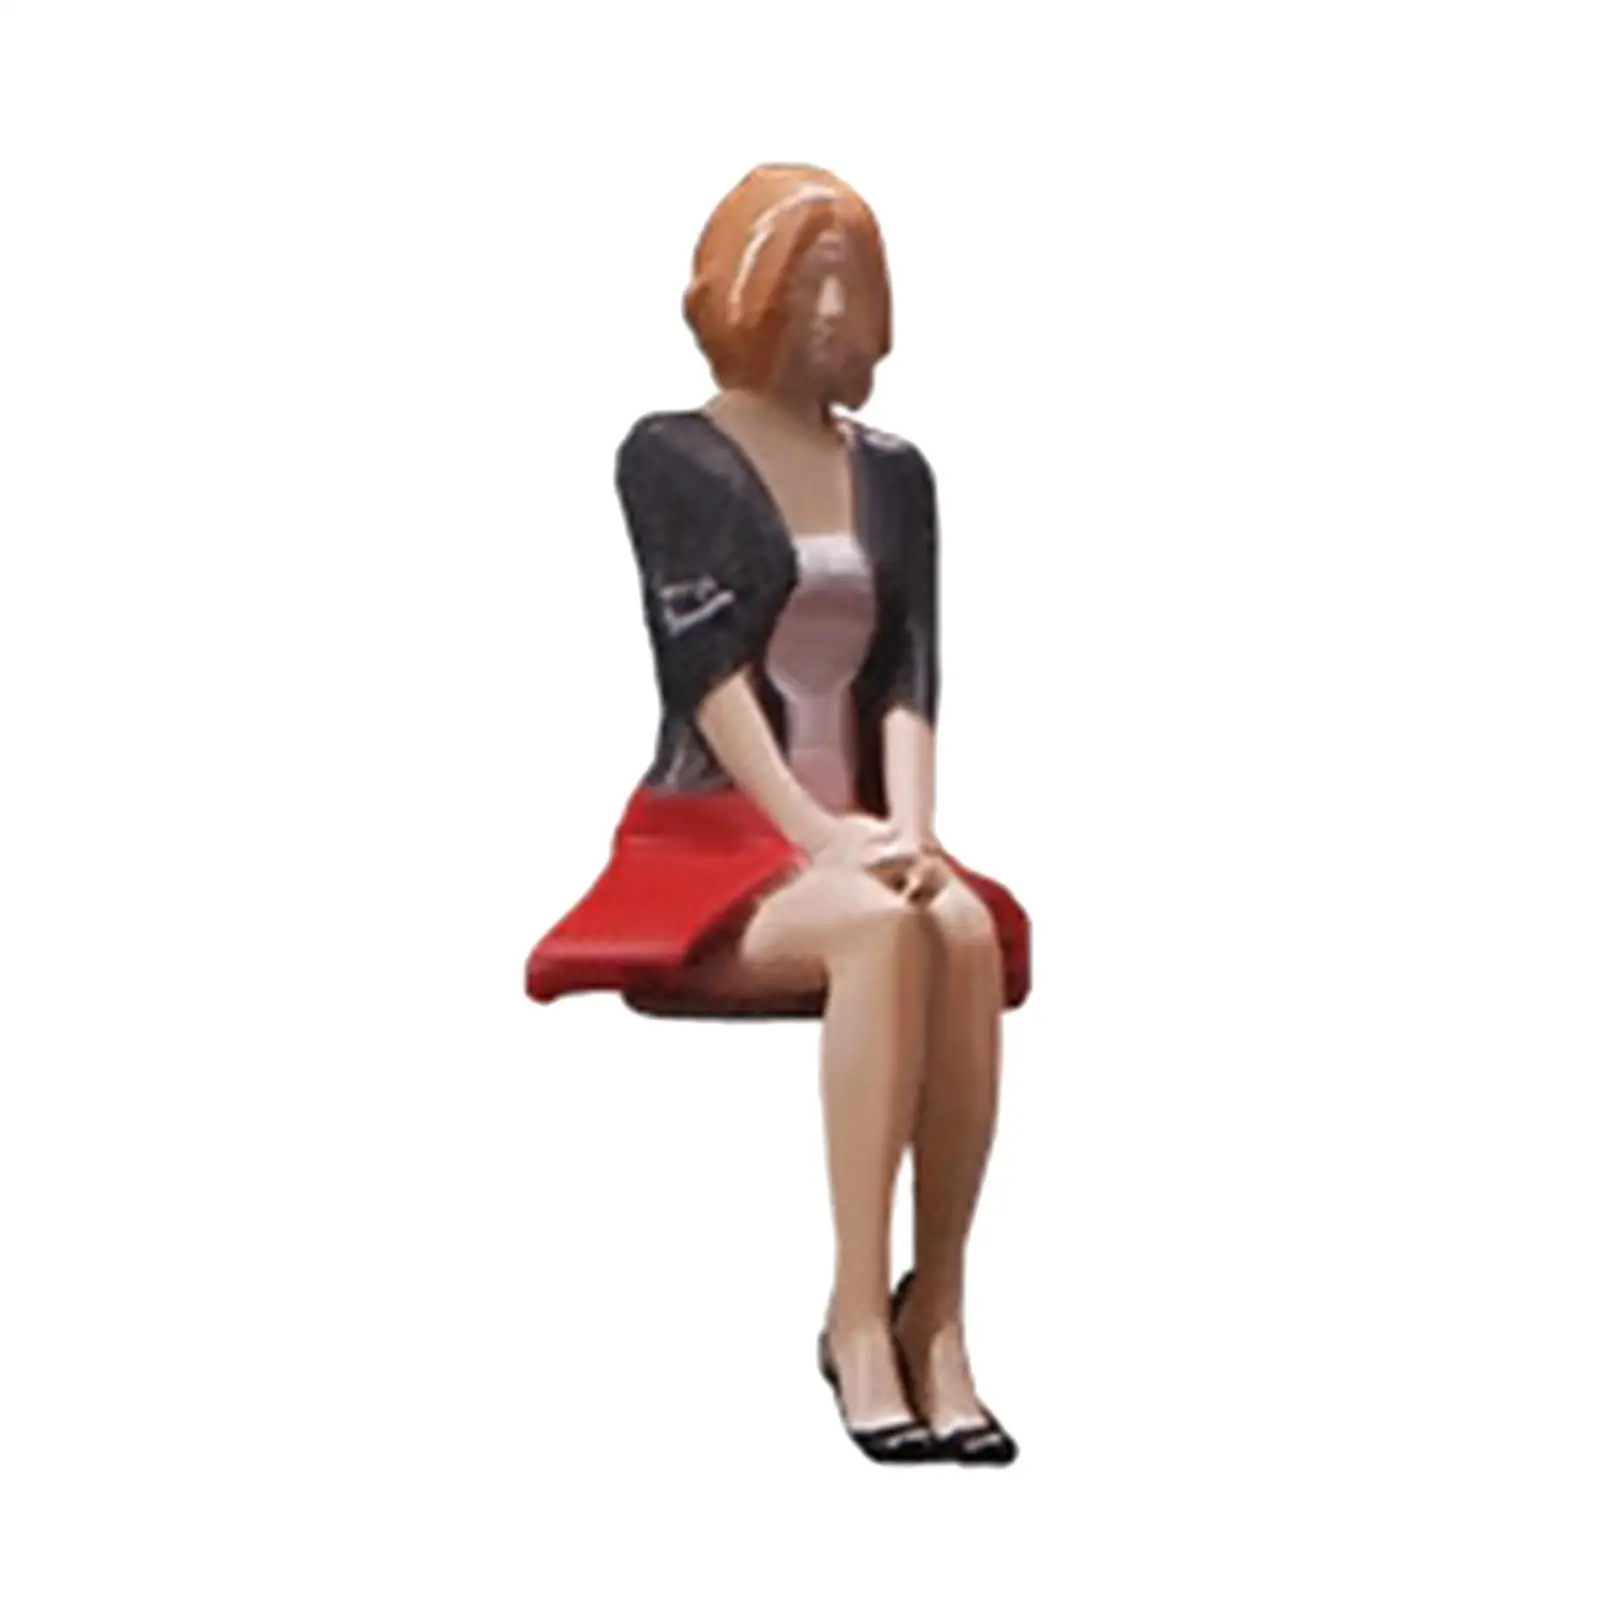 1:64 Girl Figure Miniature People Doll for Train Railway Dioramas Layout